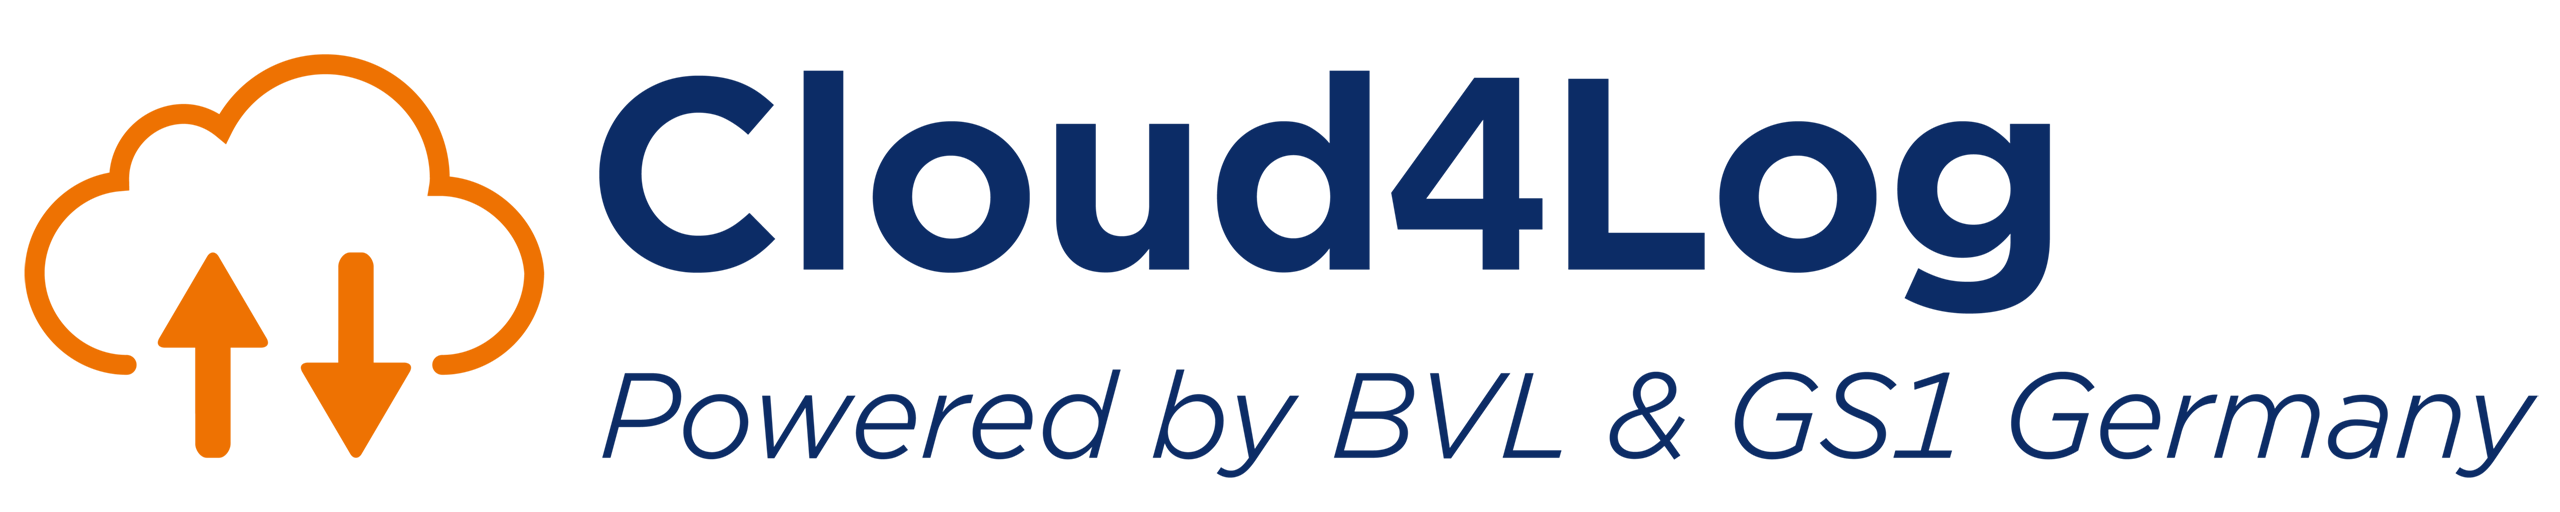 Cloud4Log Logo